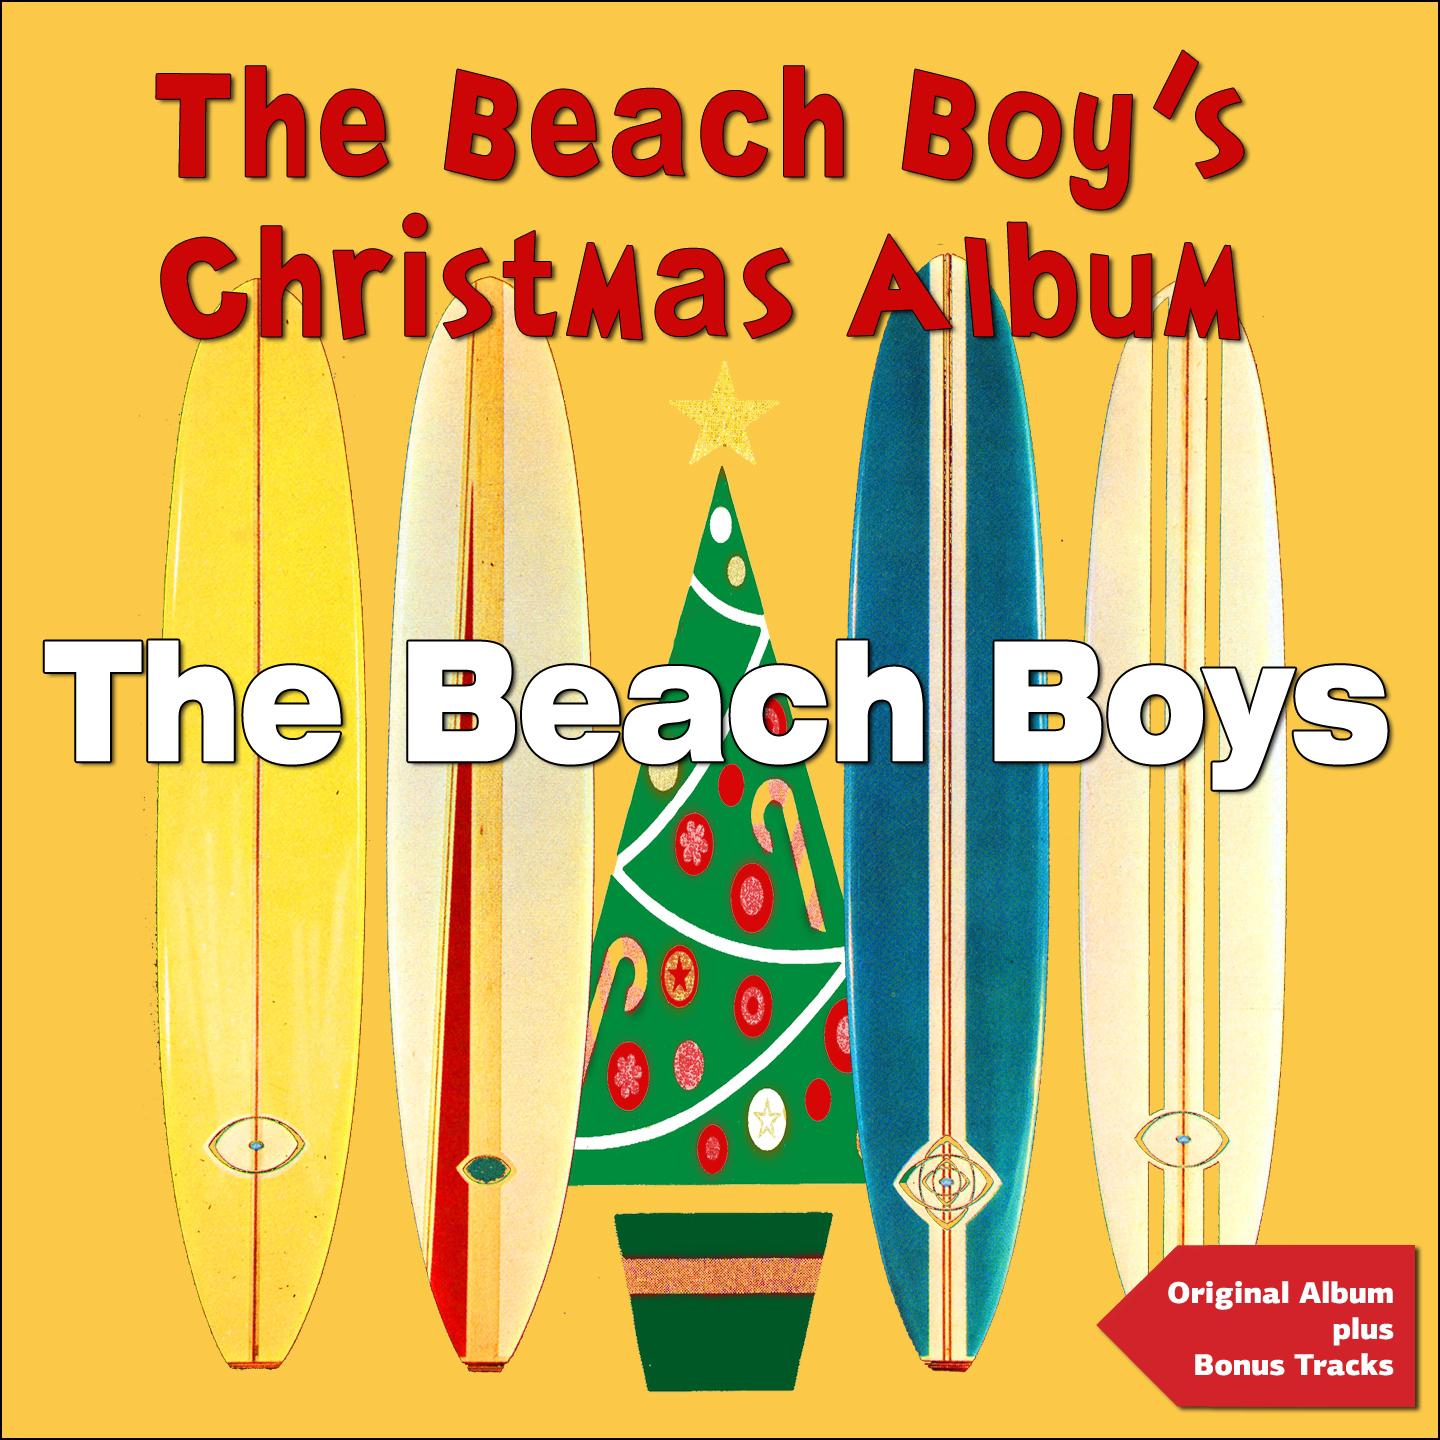 The Beach Boy's Christmas Album